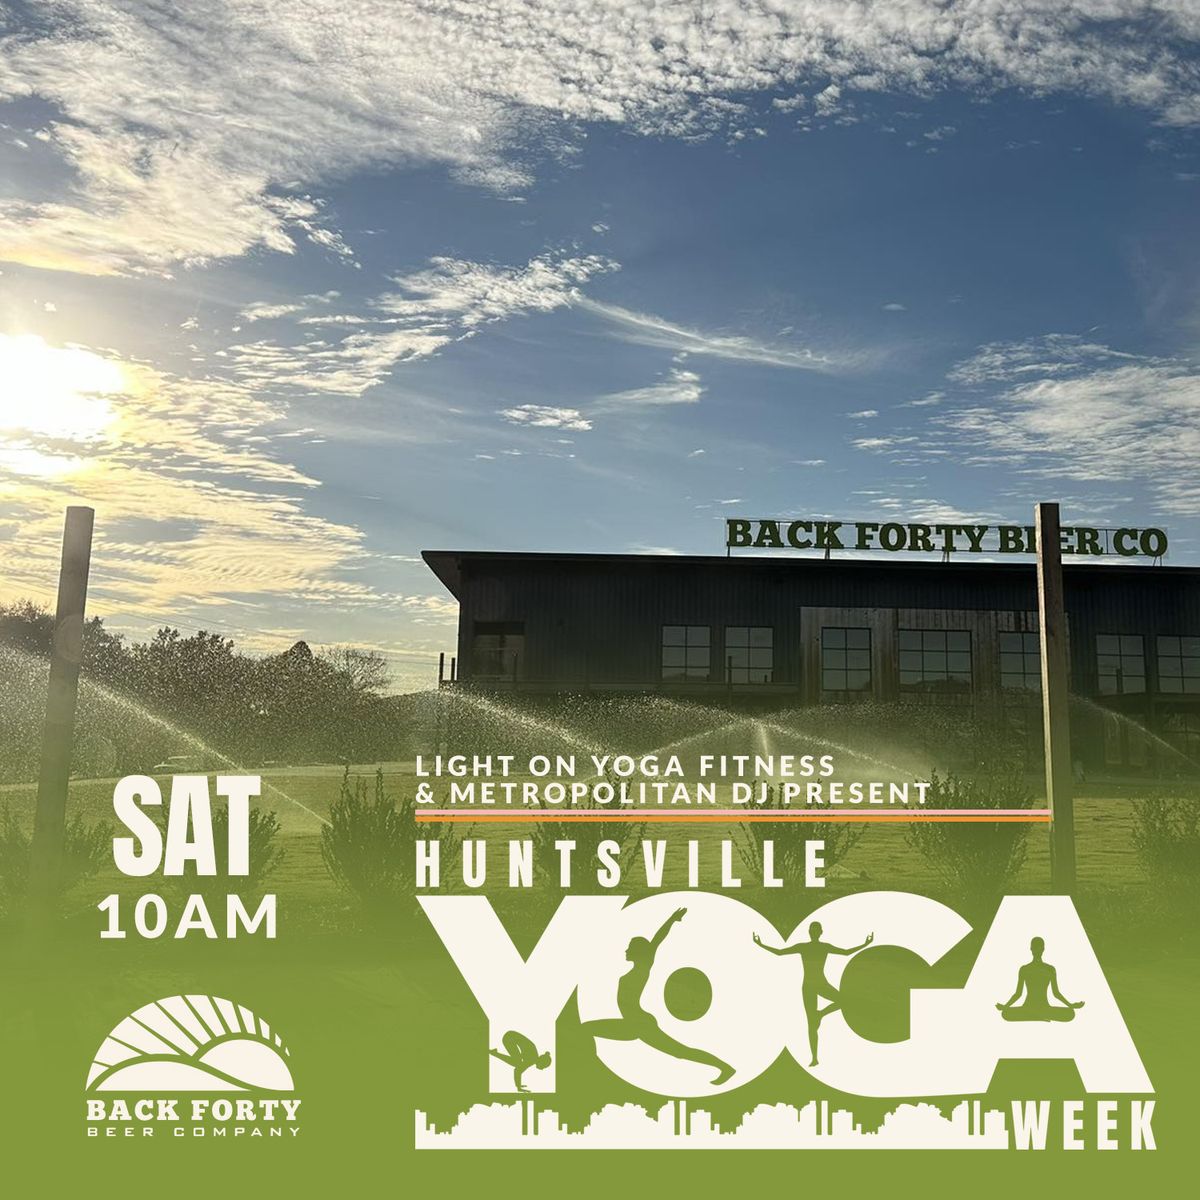 Huntsville Yoga Week - Back Forty Beer Company